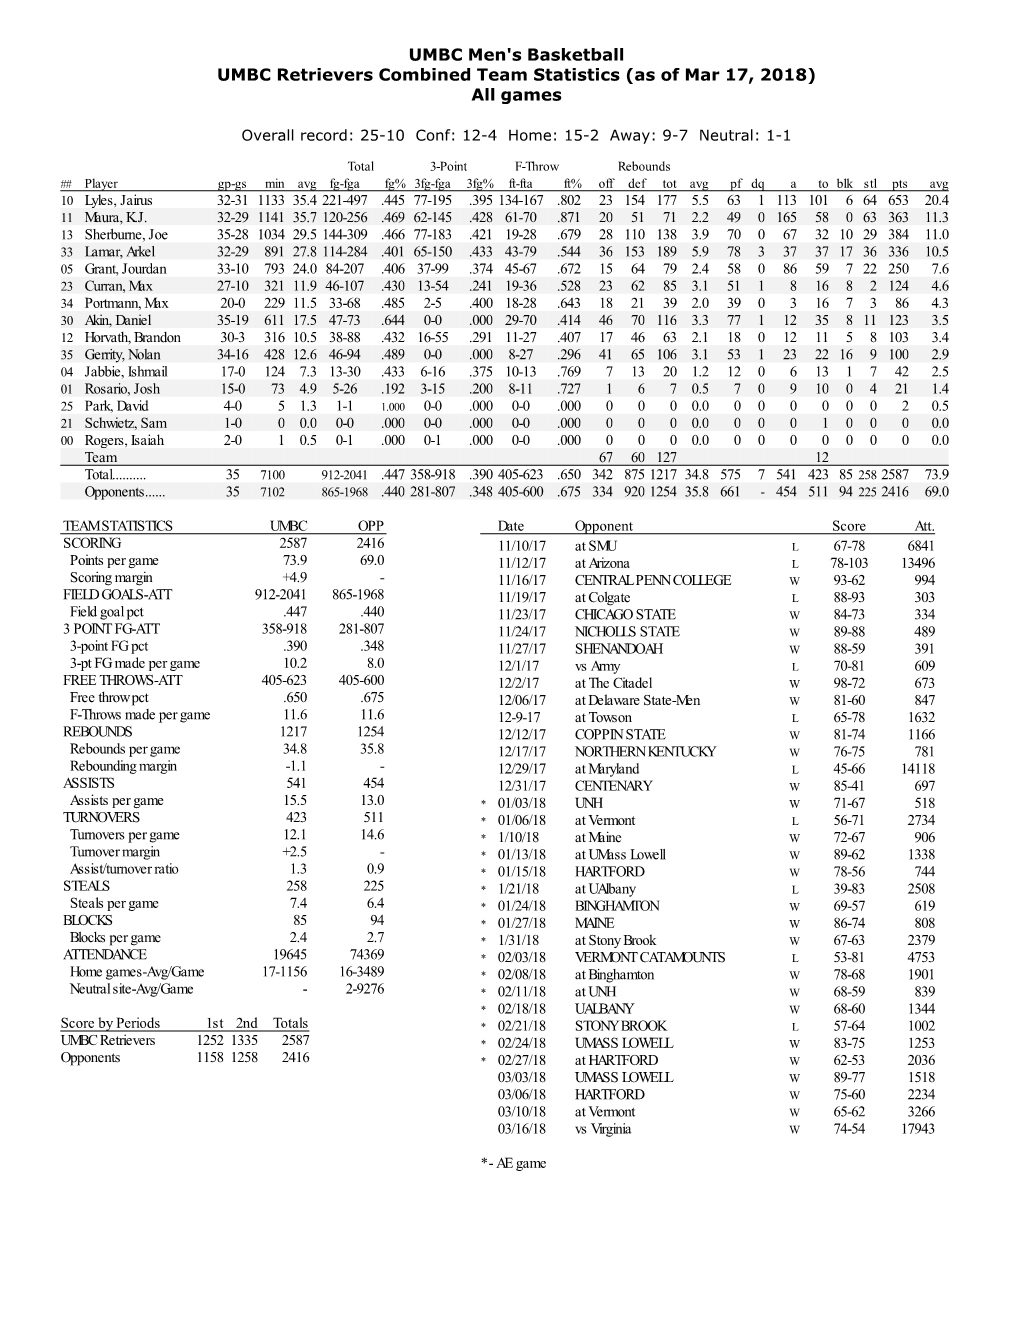 UMBC Men's Basketball UMBC Retrievers Combined Team Statistics (As of Mar 17, 2018) All Games